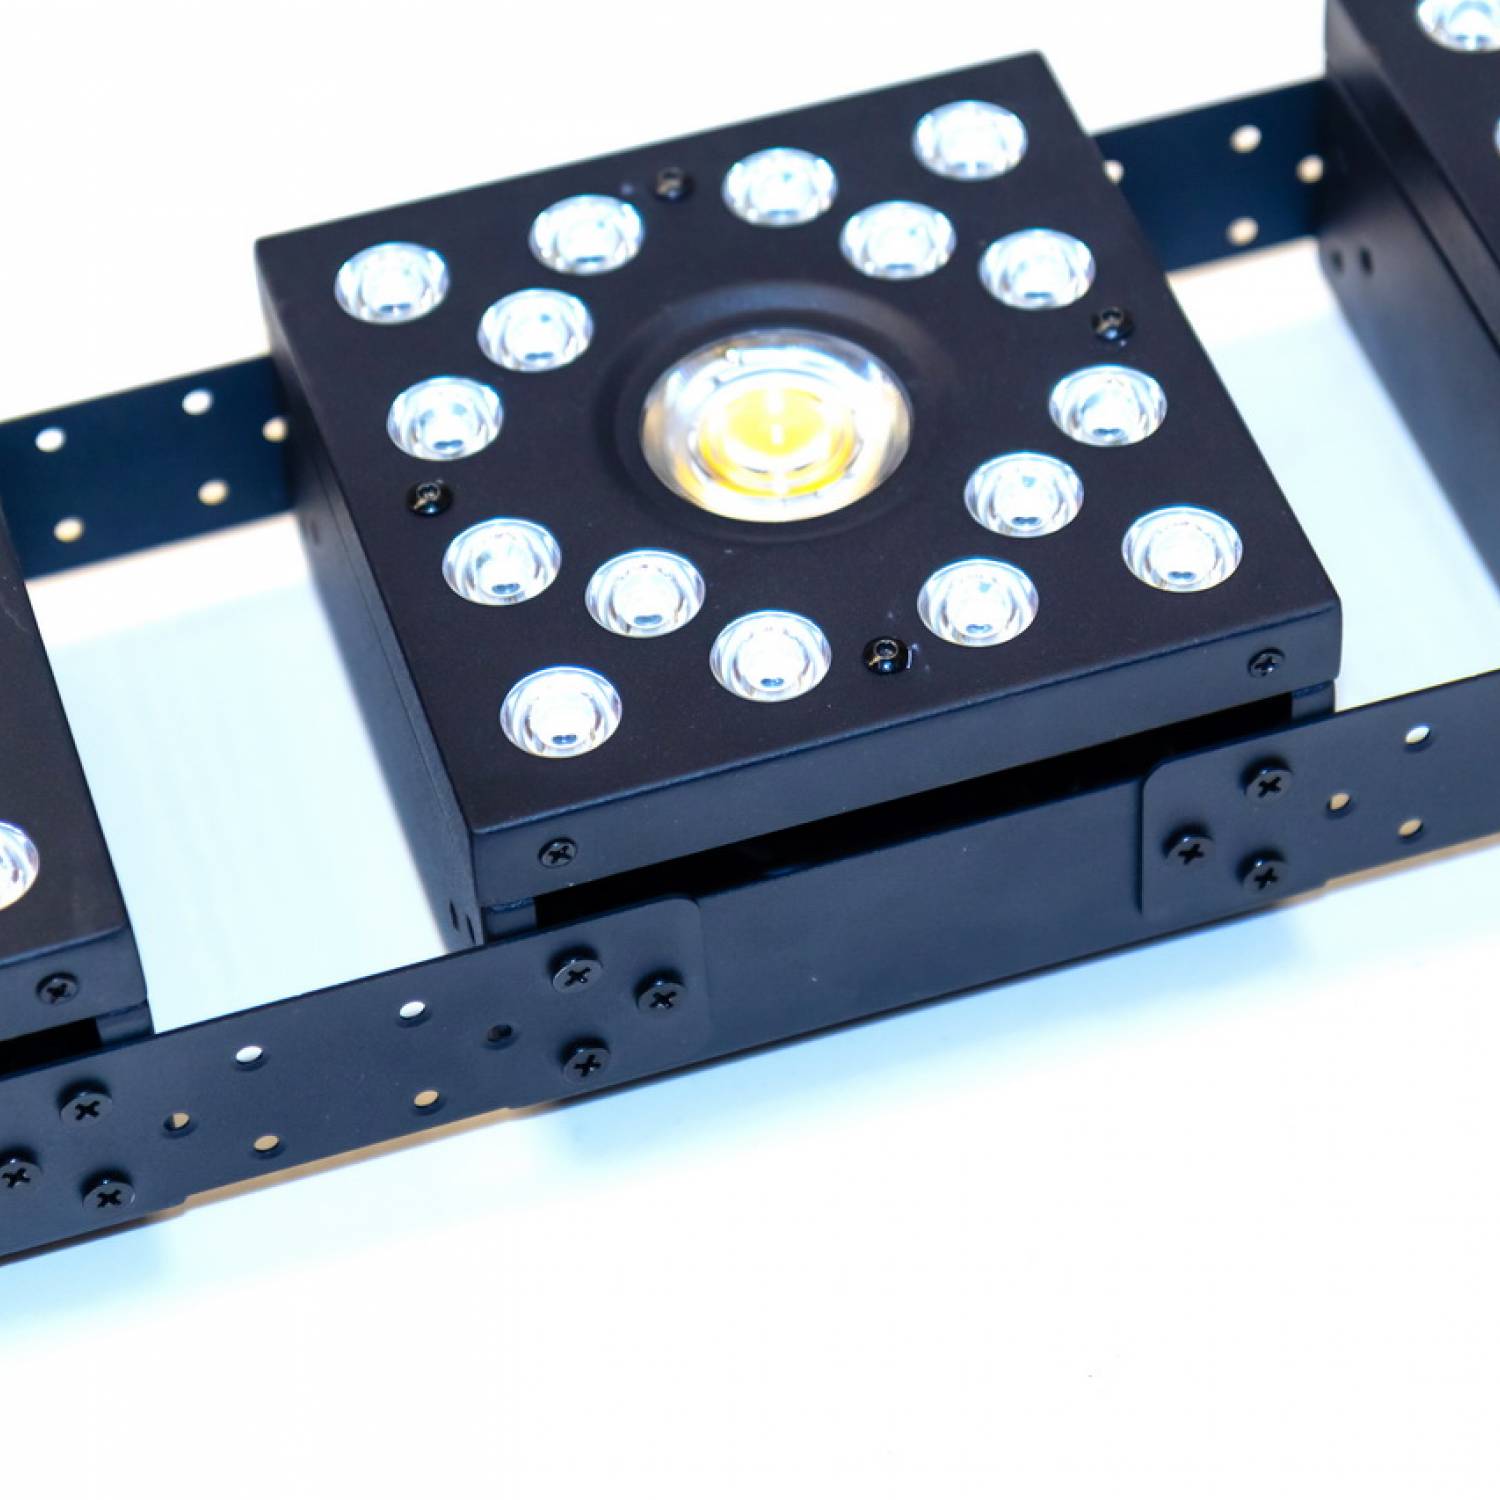 Фитолампа Apollo Mix x4 LED COB 252W (комплект из 4 ламп)